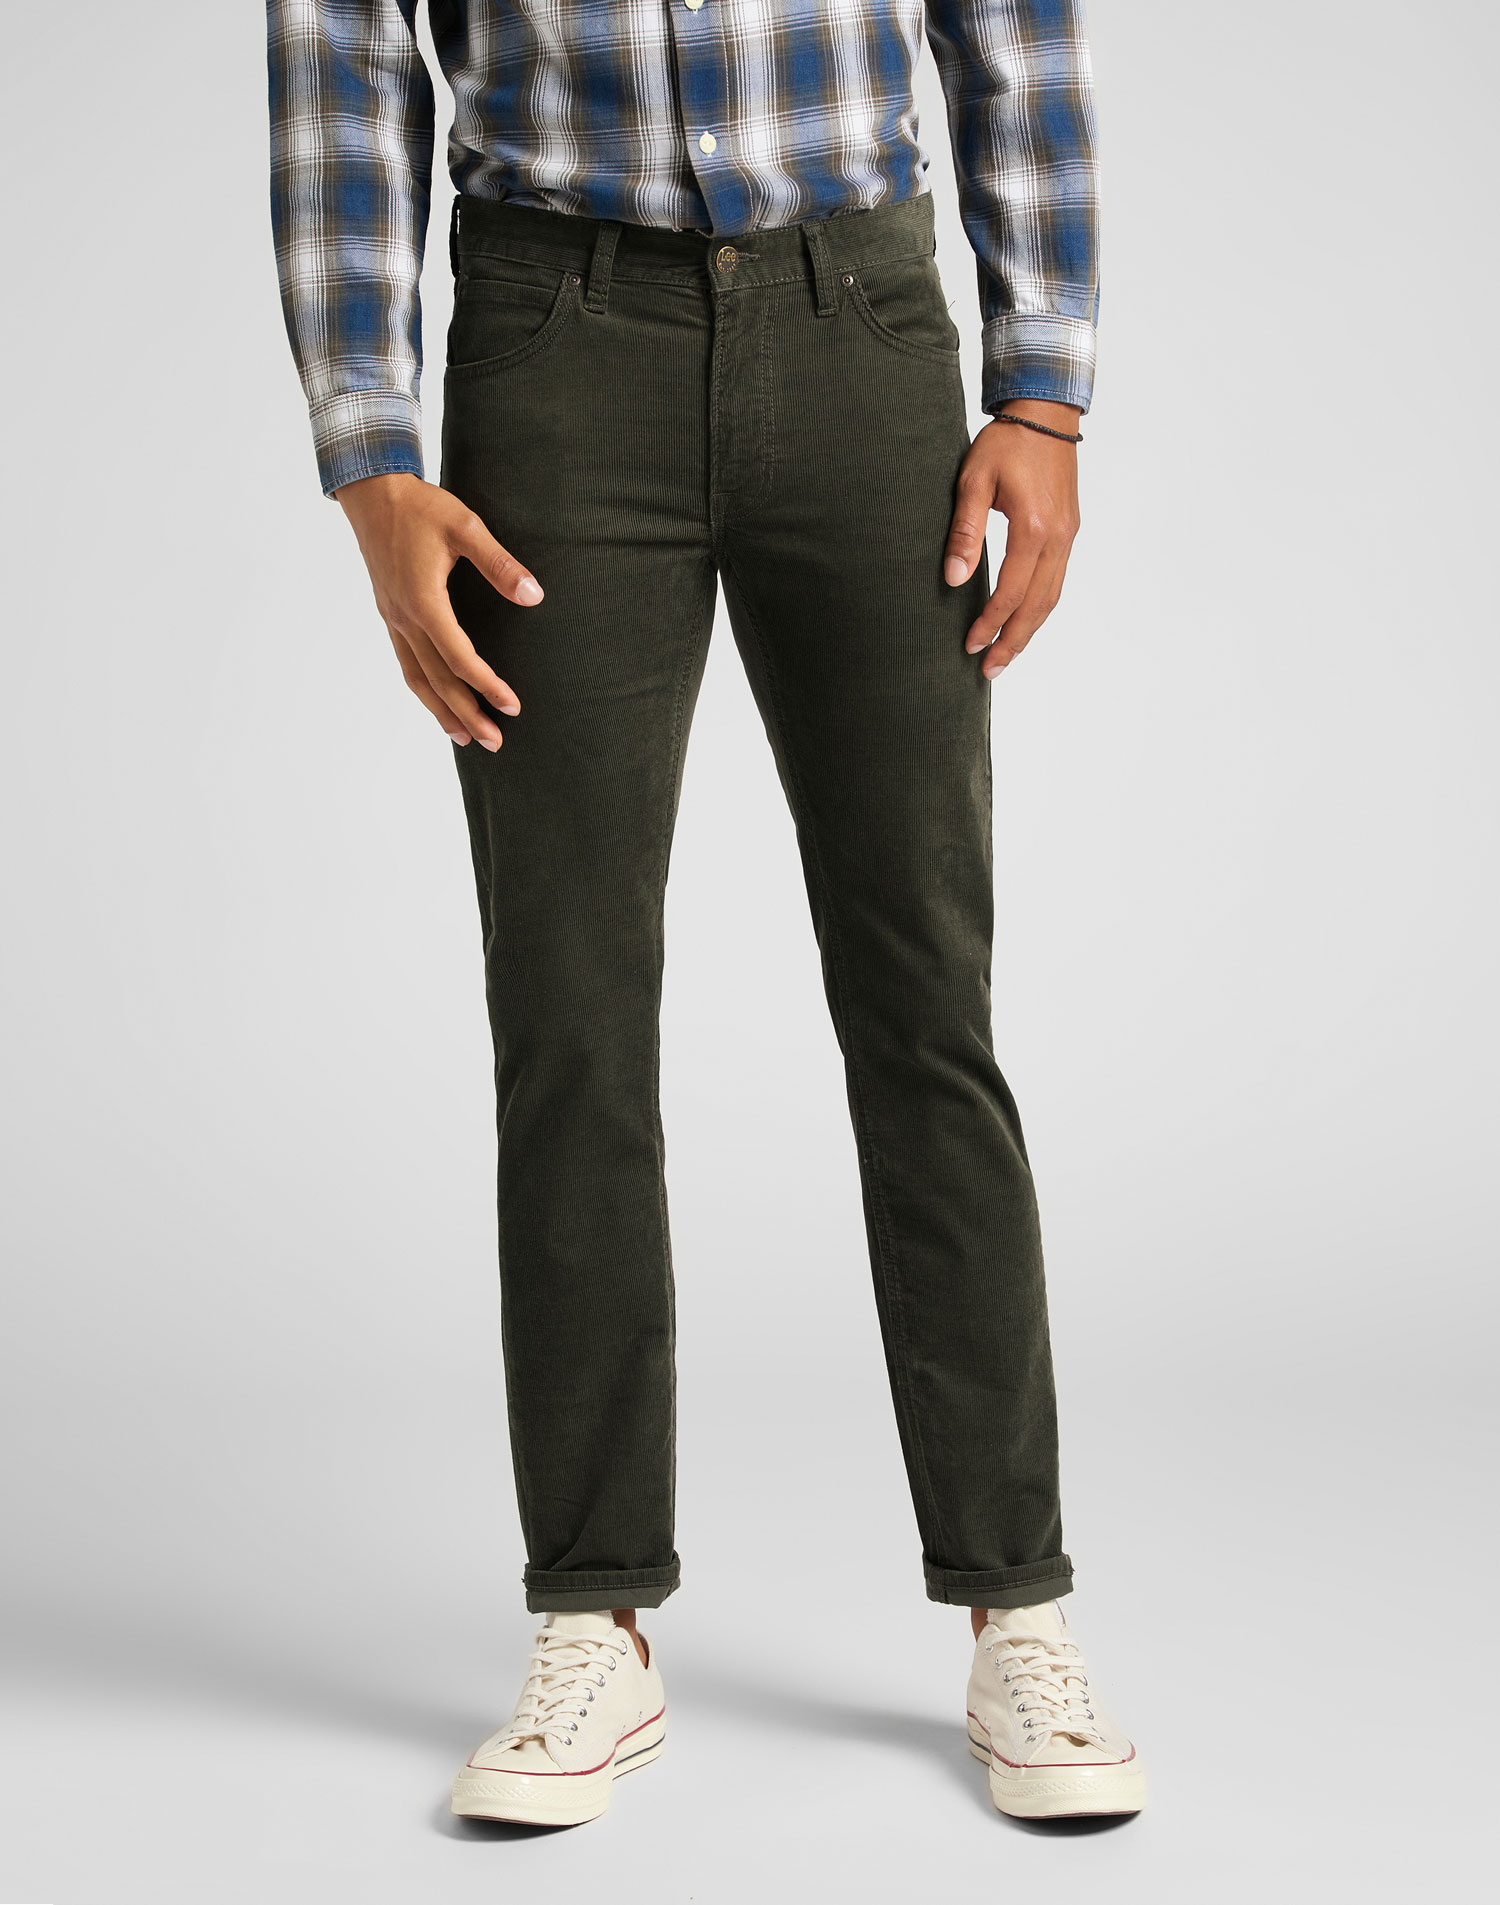 Lee Daren zip regular pantalons texans de pana d'home L707RL61 caqui